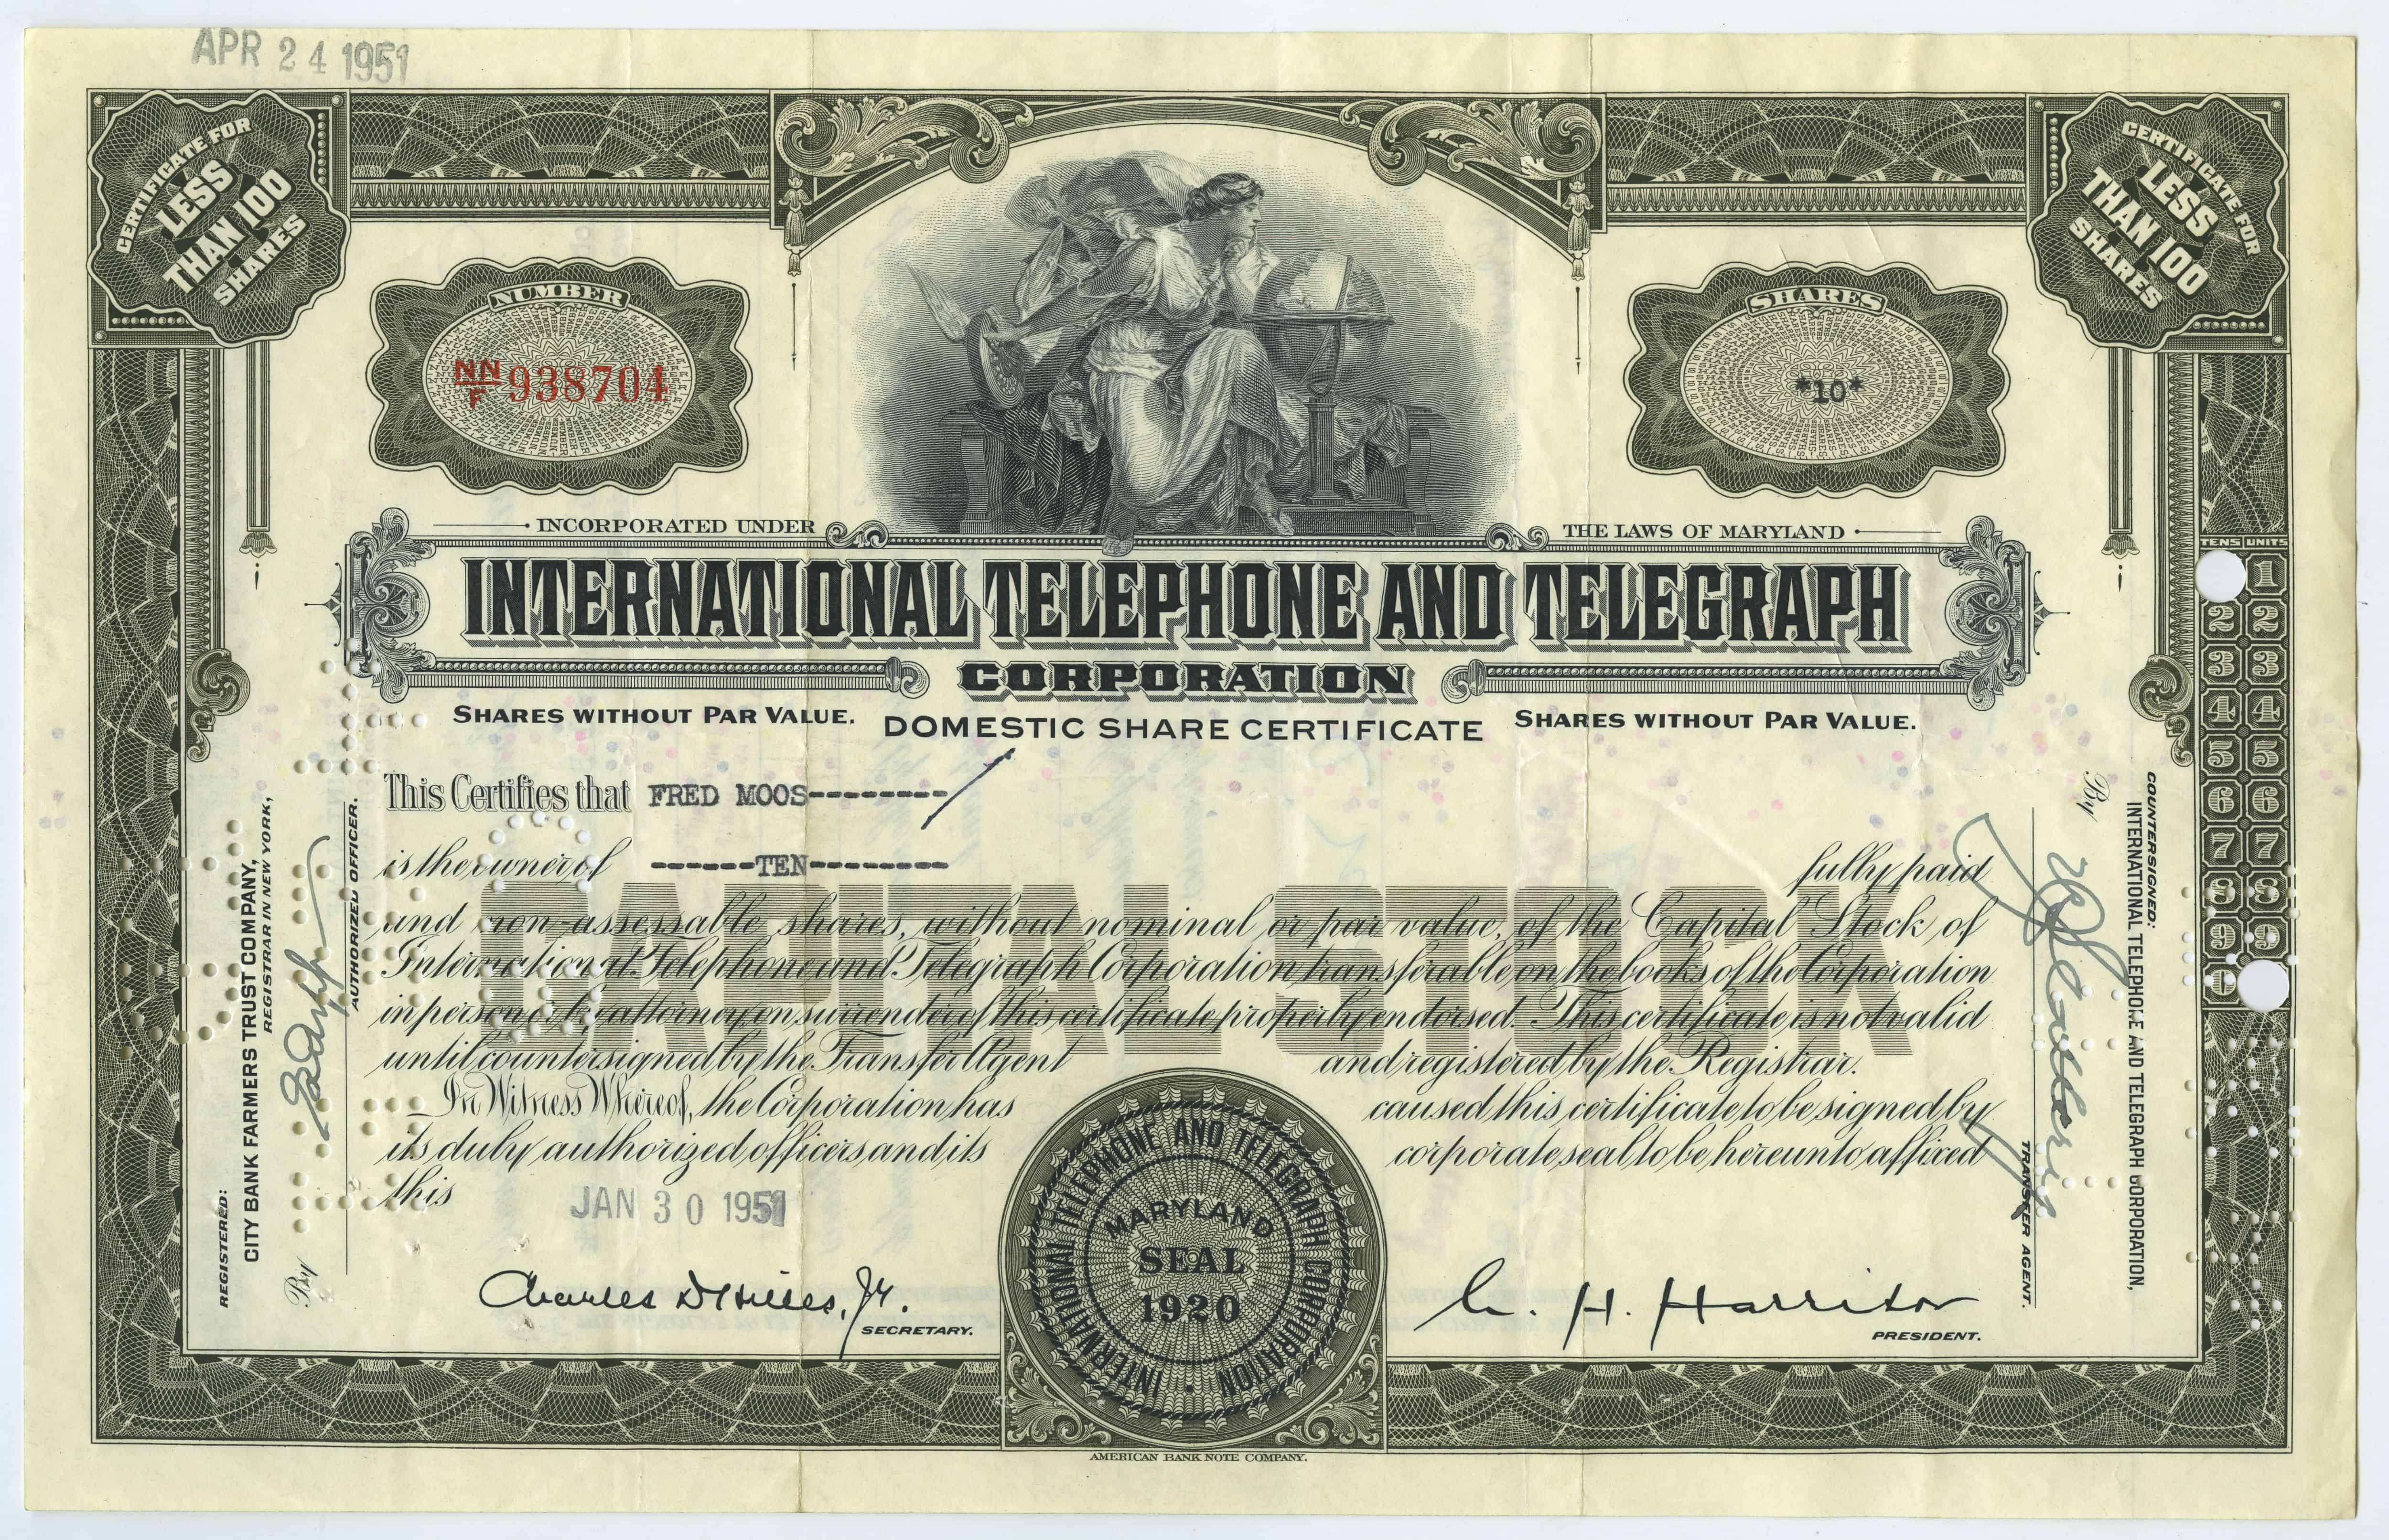 10 akcji spółki International Telephone and Telegraph Corporation z dnia 30 stycznia 1951 roku